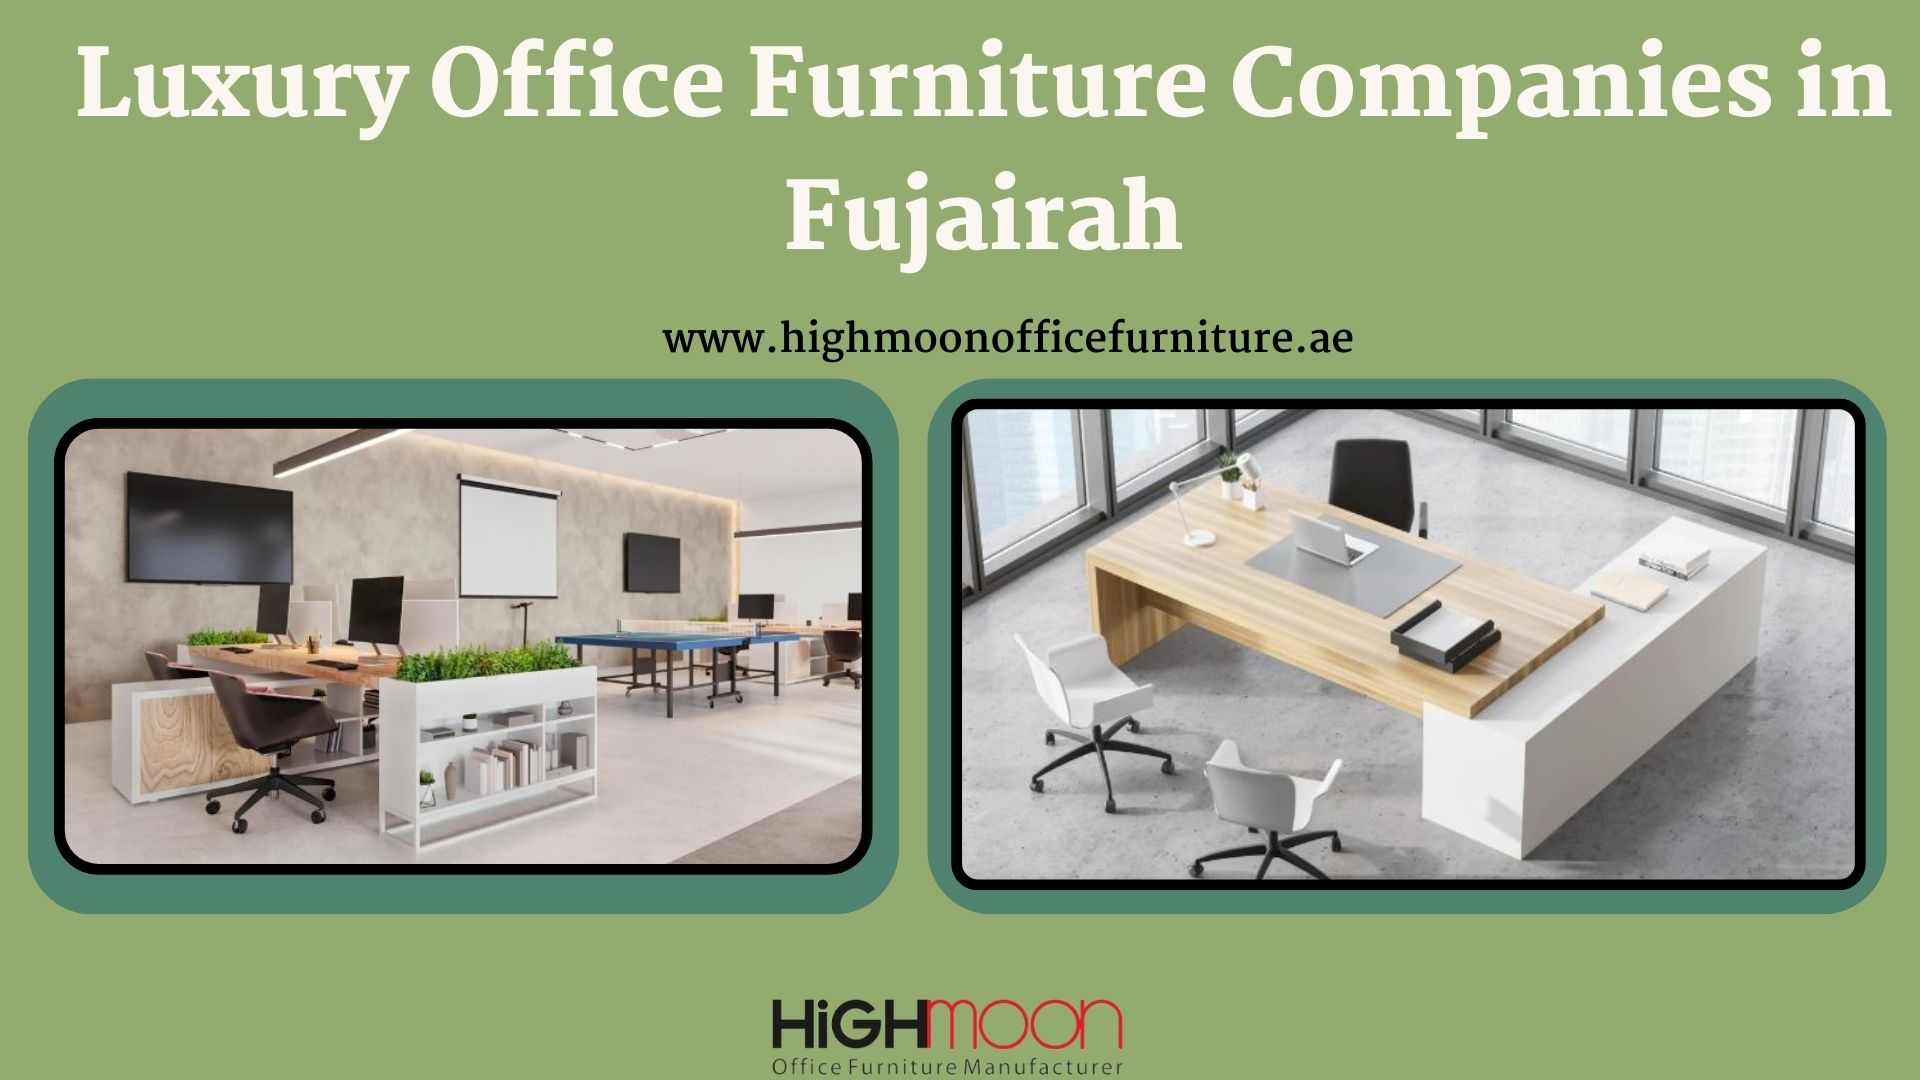 Luxury Office Furniture Companies in Fujairah